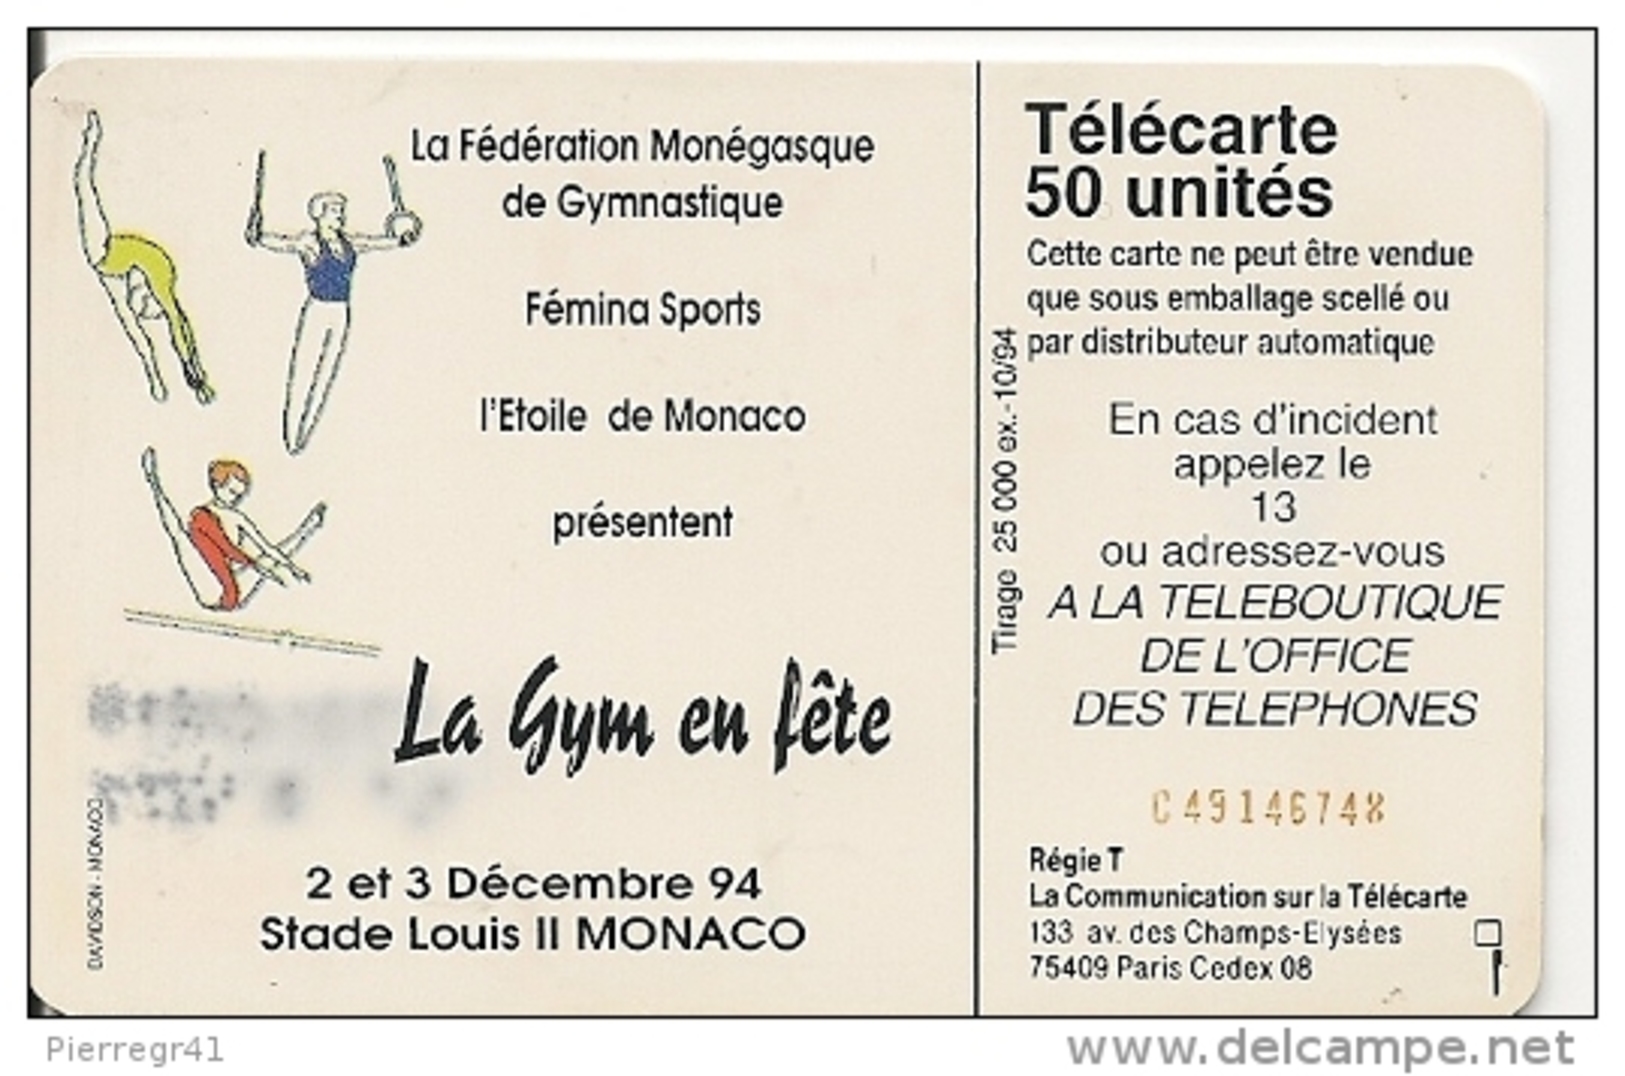 CARTEà-PUBLIC-MONACO-50U-MF32-SC7-10/94-GALA GRACE GYM-V° Rge C491467747-UTILISE-BE - Monaco